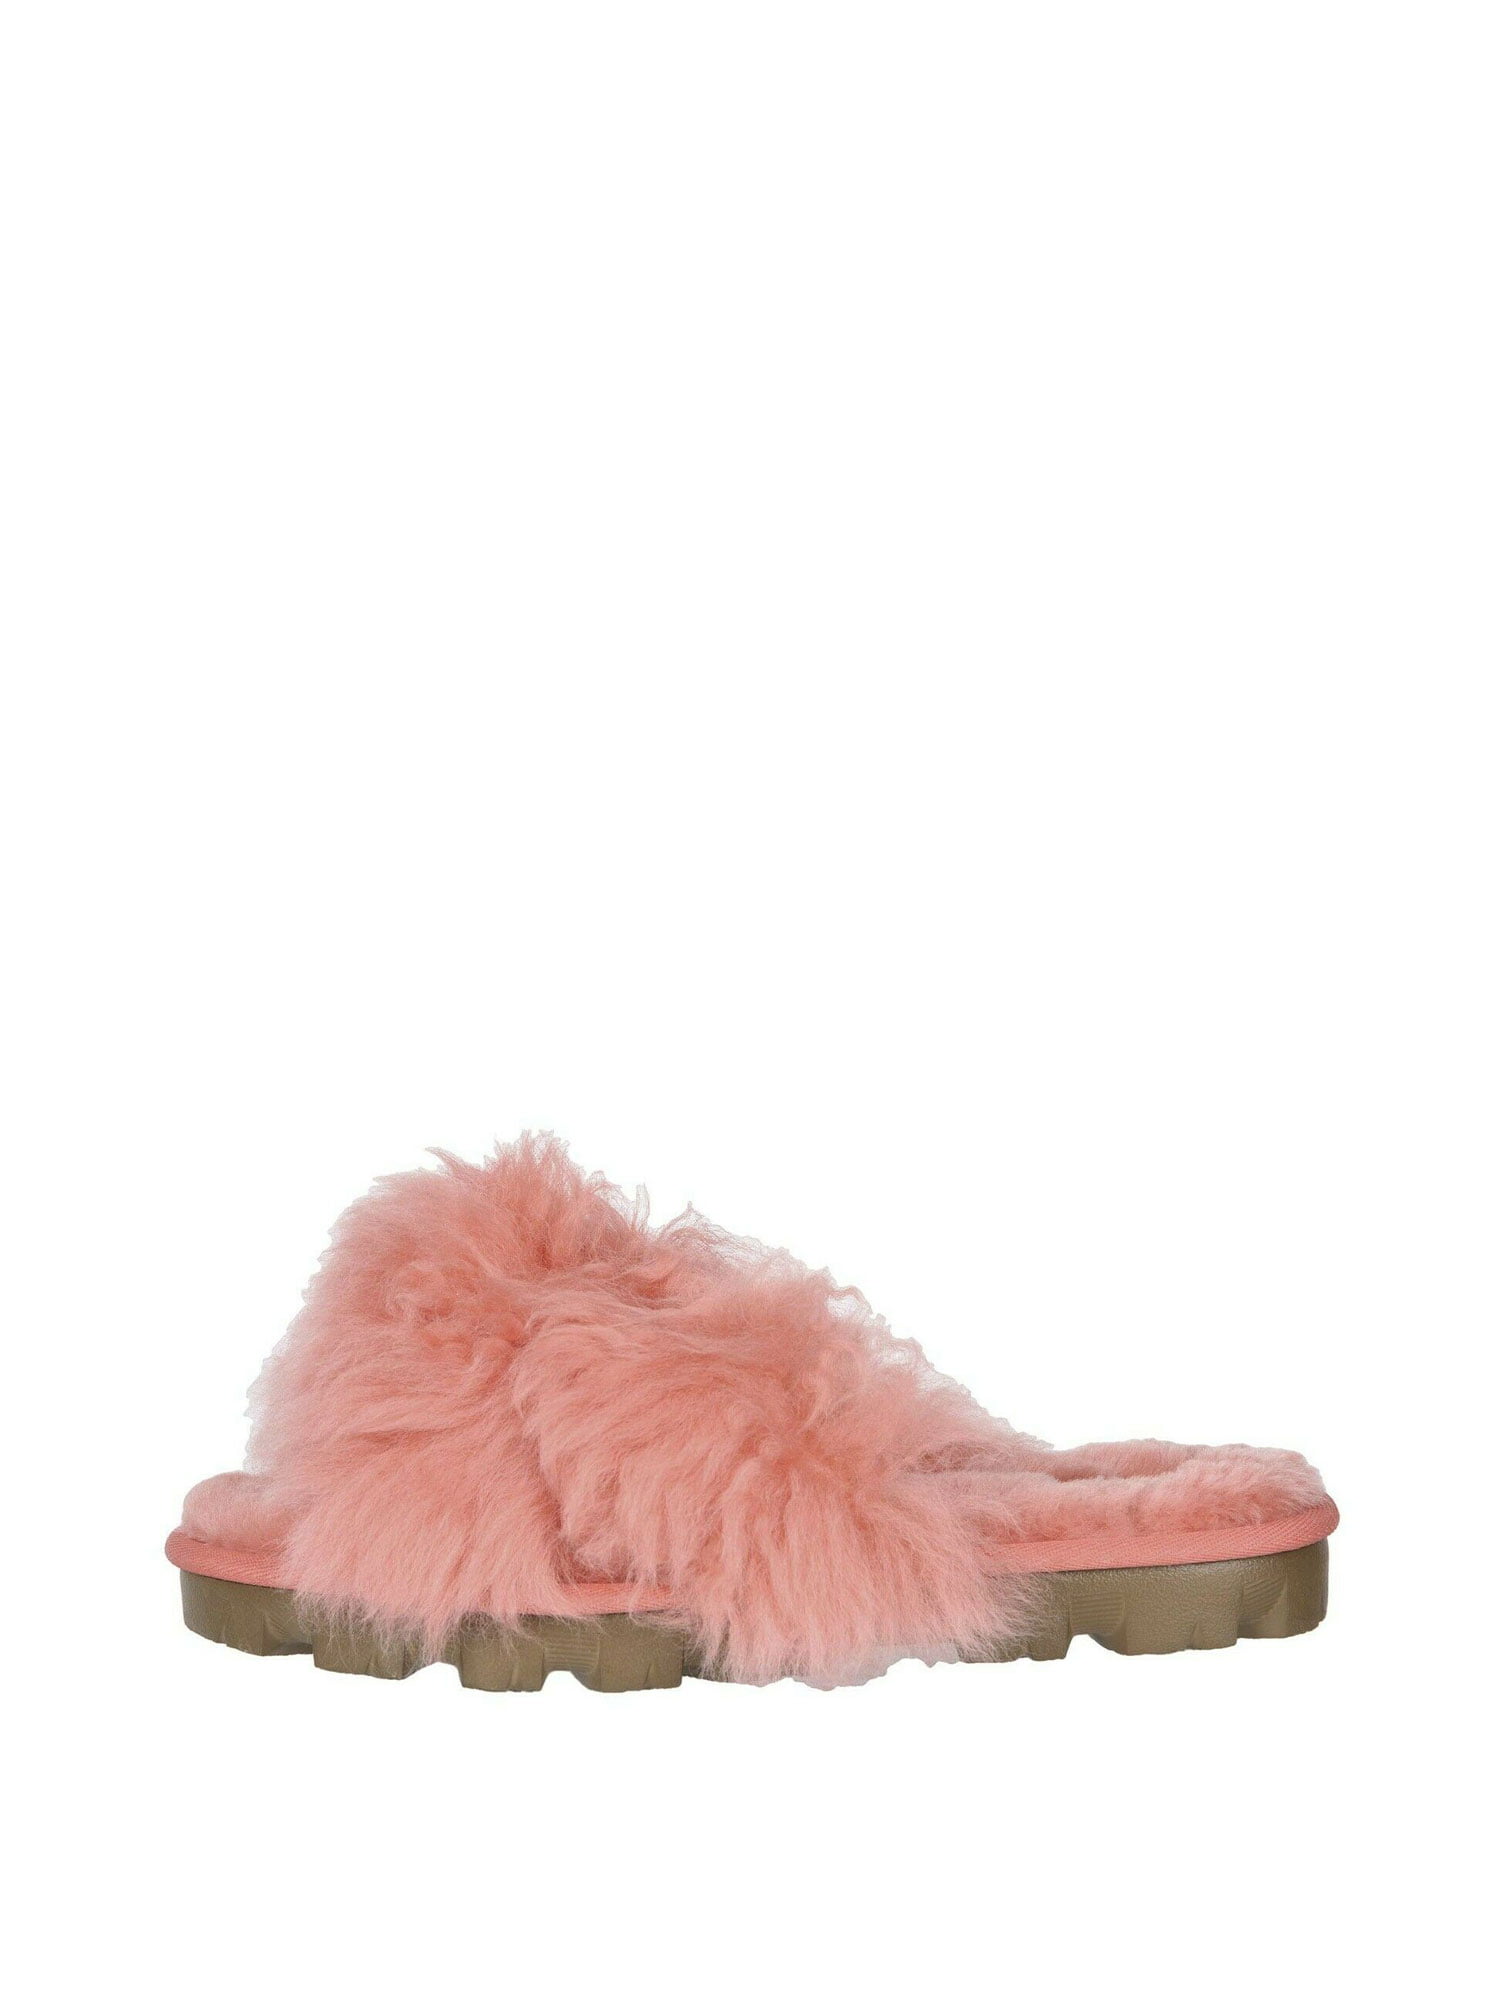 UGG Super Fluff Slipper Sandals Womens / 1121751 | eBay